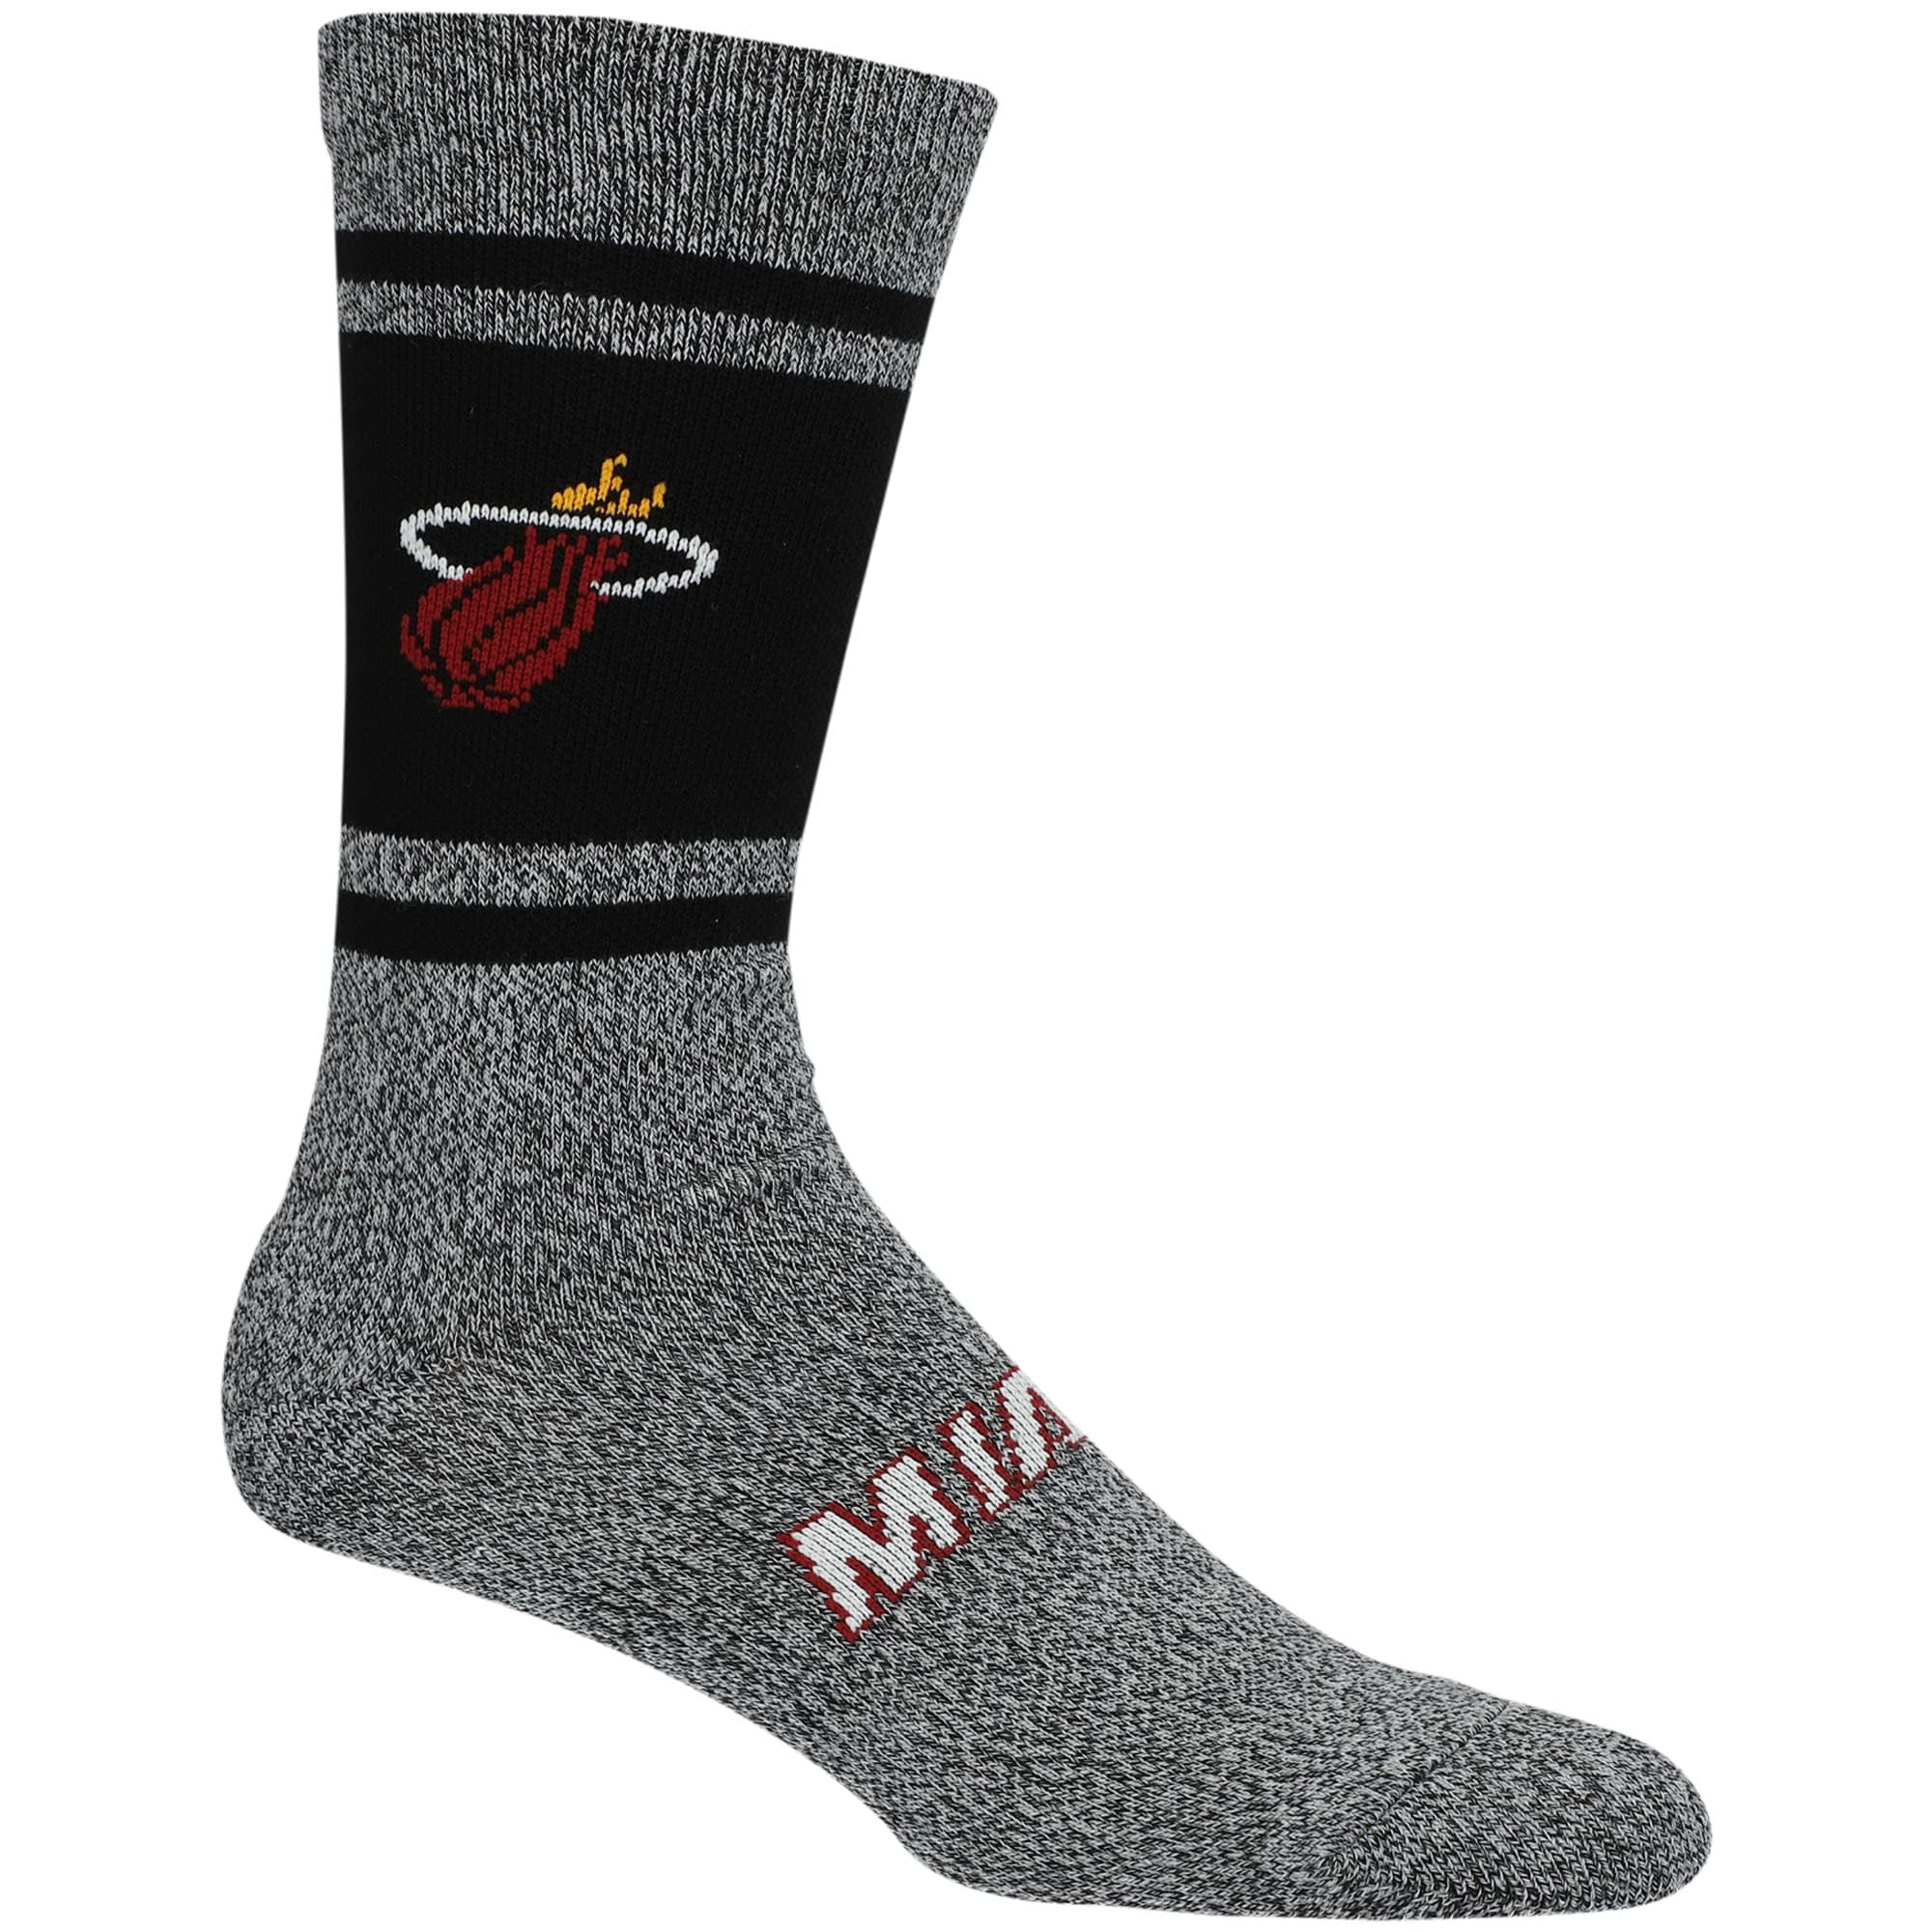 PKWY - Miami Heat Varsity Crew Socks - Walmart.com - Walmart.com